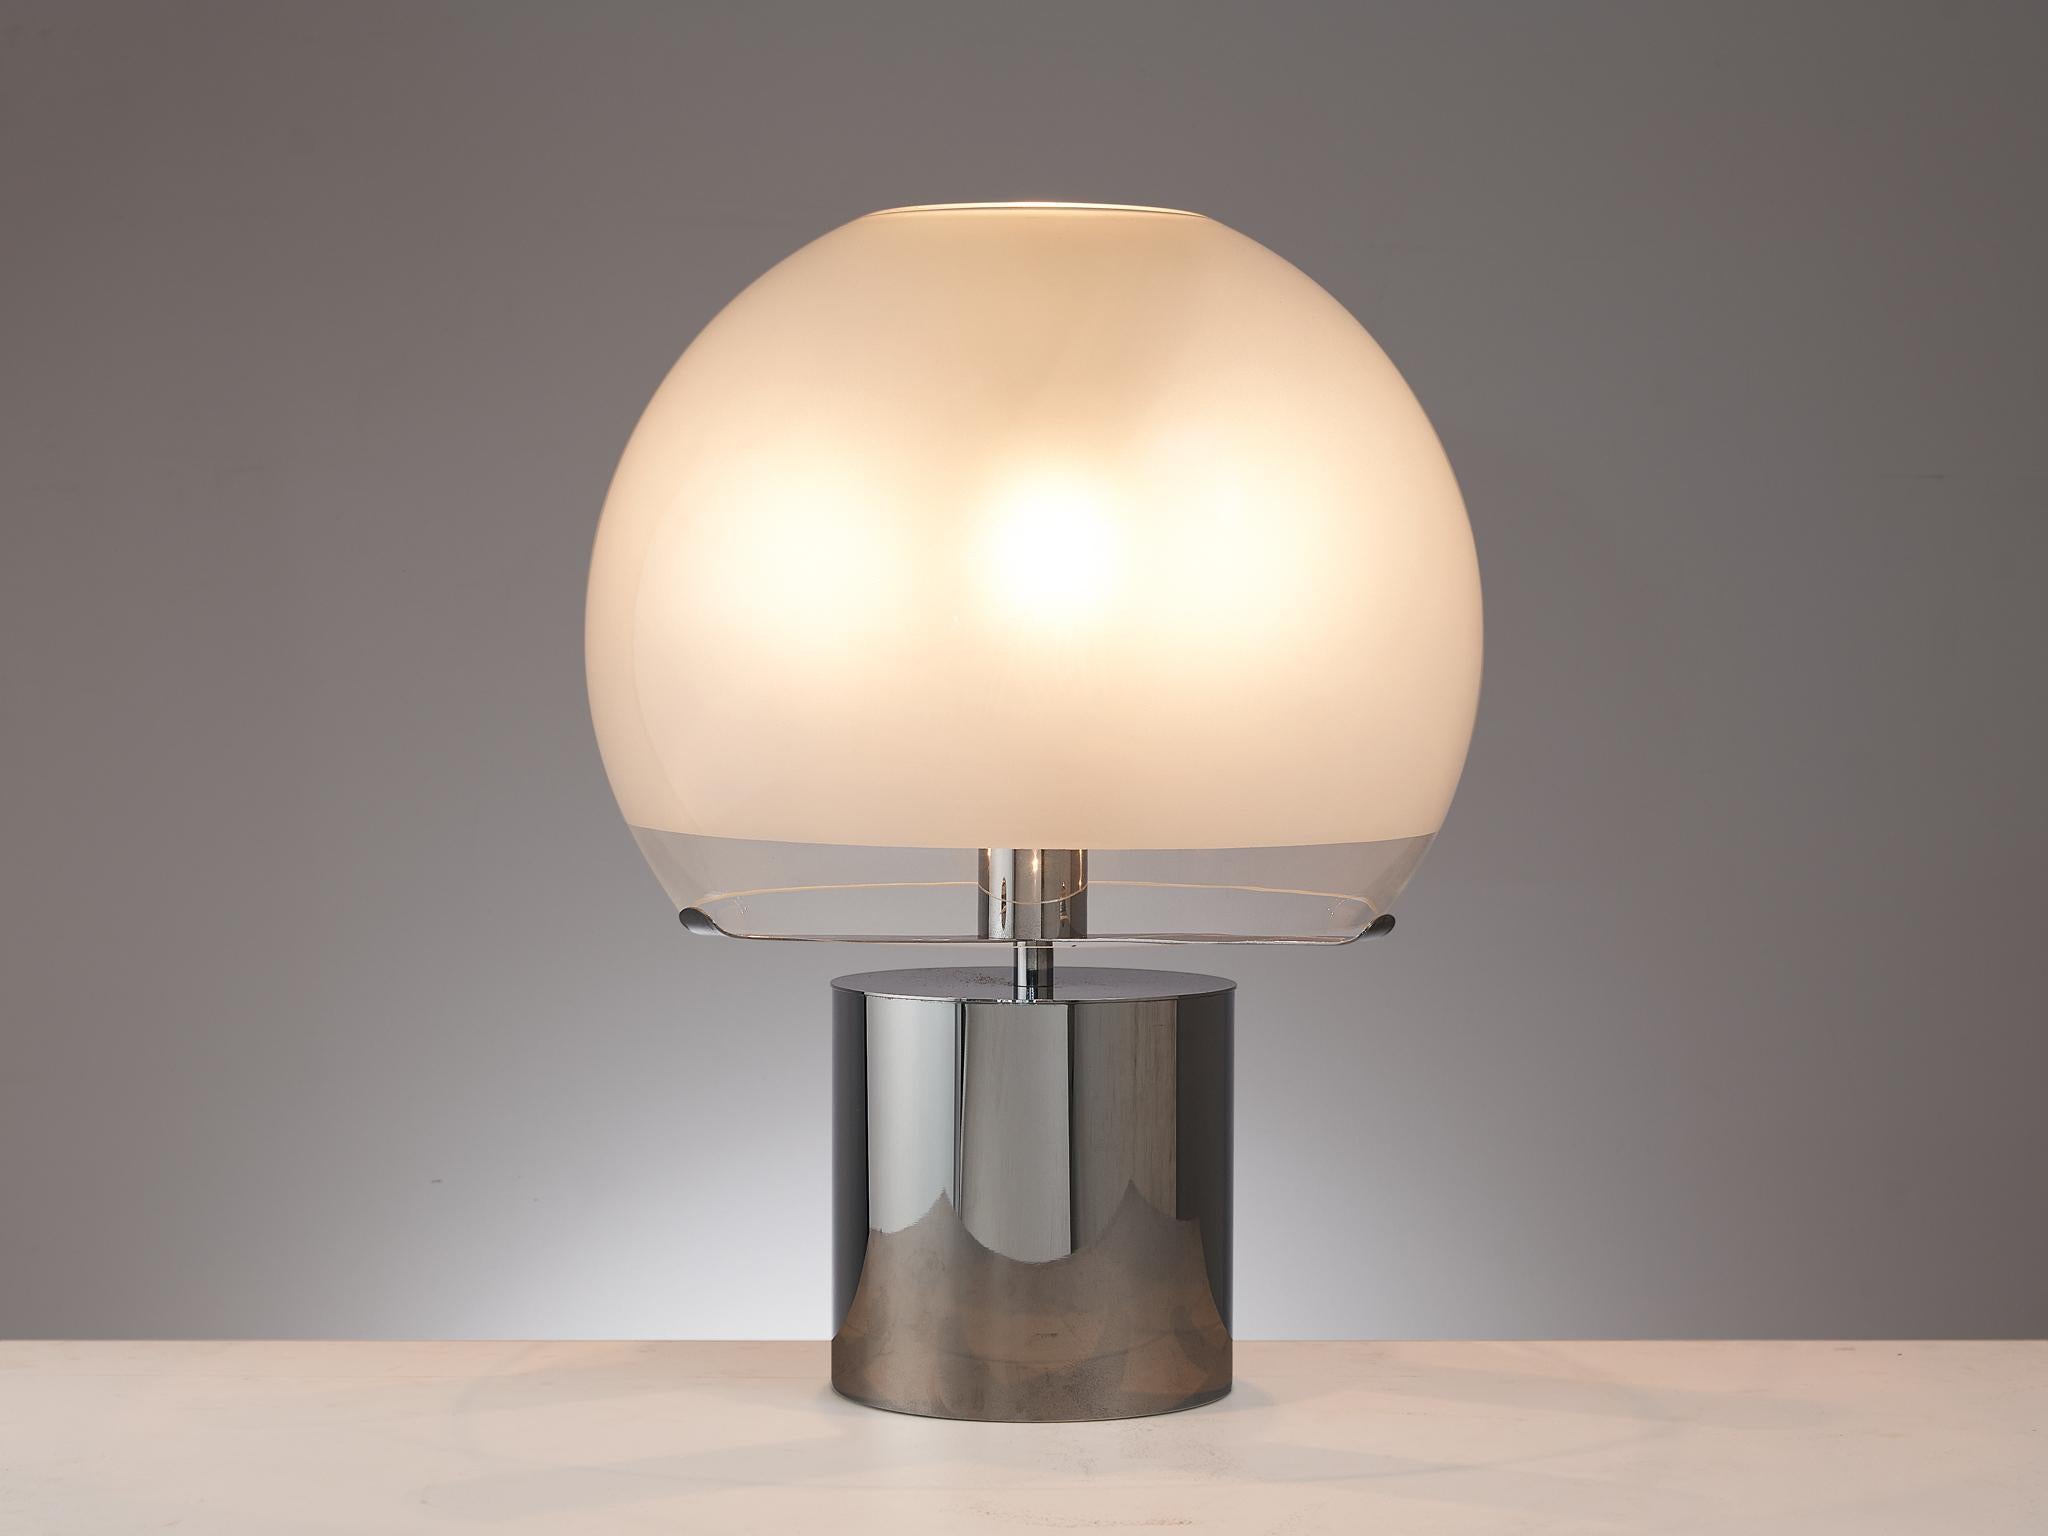 Italian Luigi Caccia Dominioni for Azucena Table Lamp in Chrome and Frosted Glass